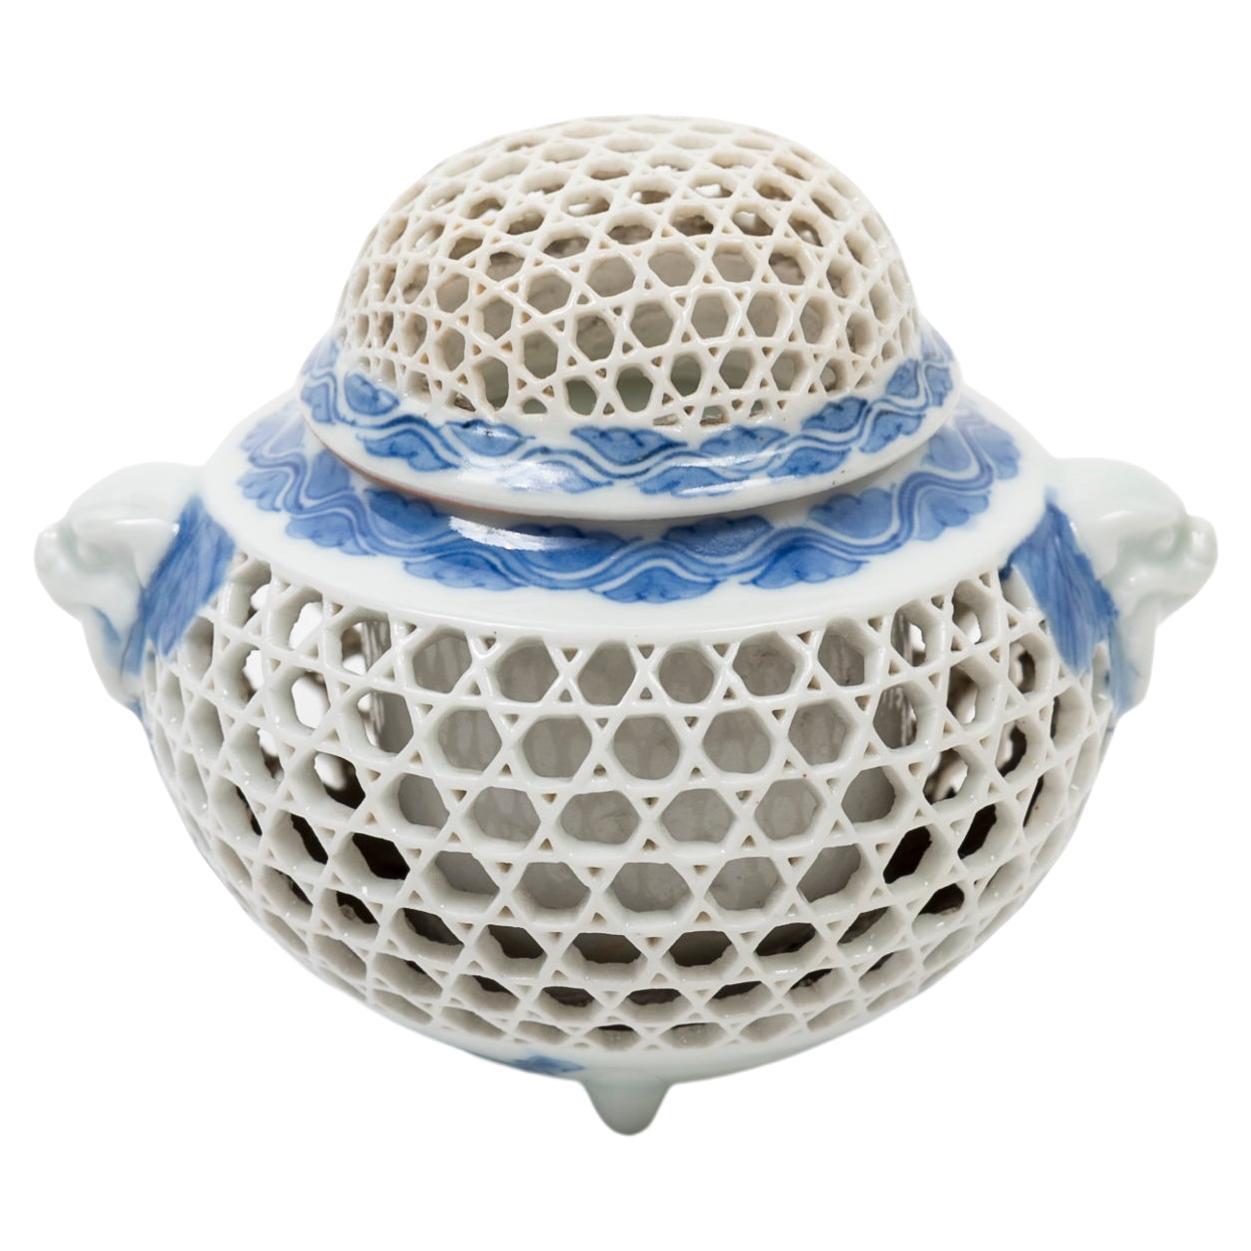 Japan hirado ware blue and white porcelain incense burner